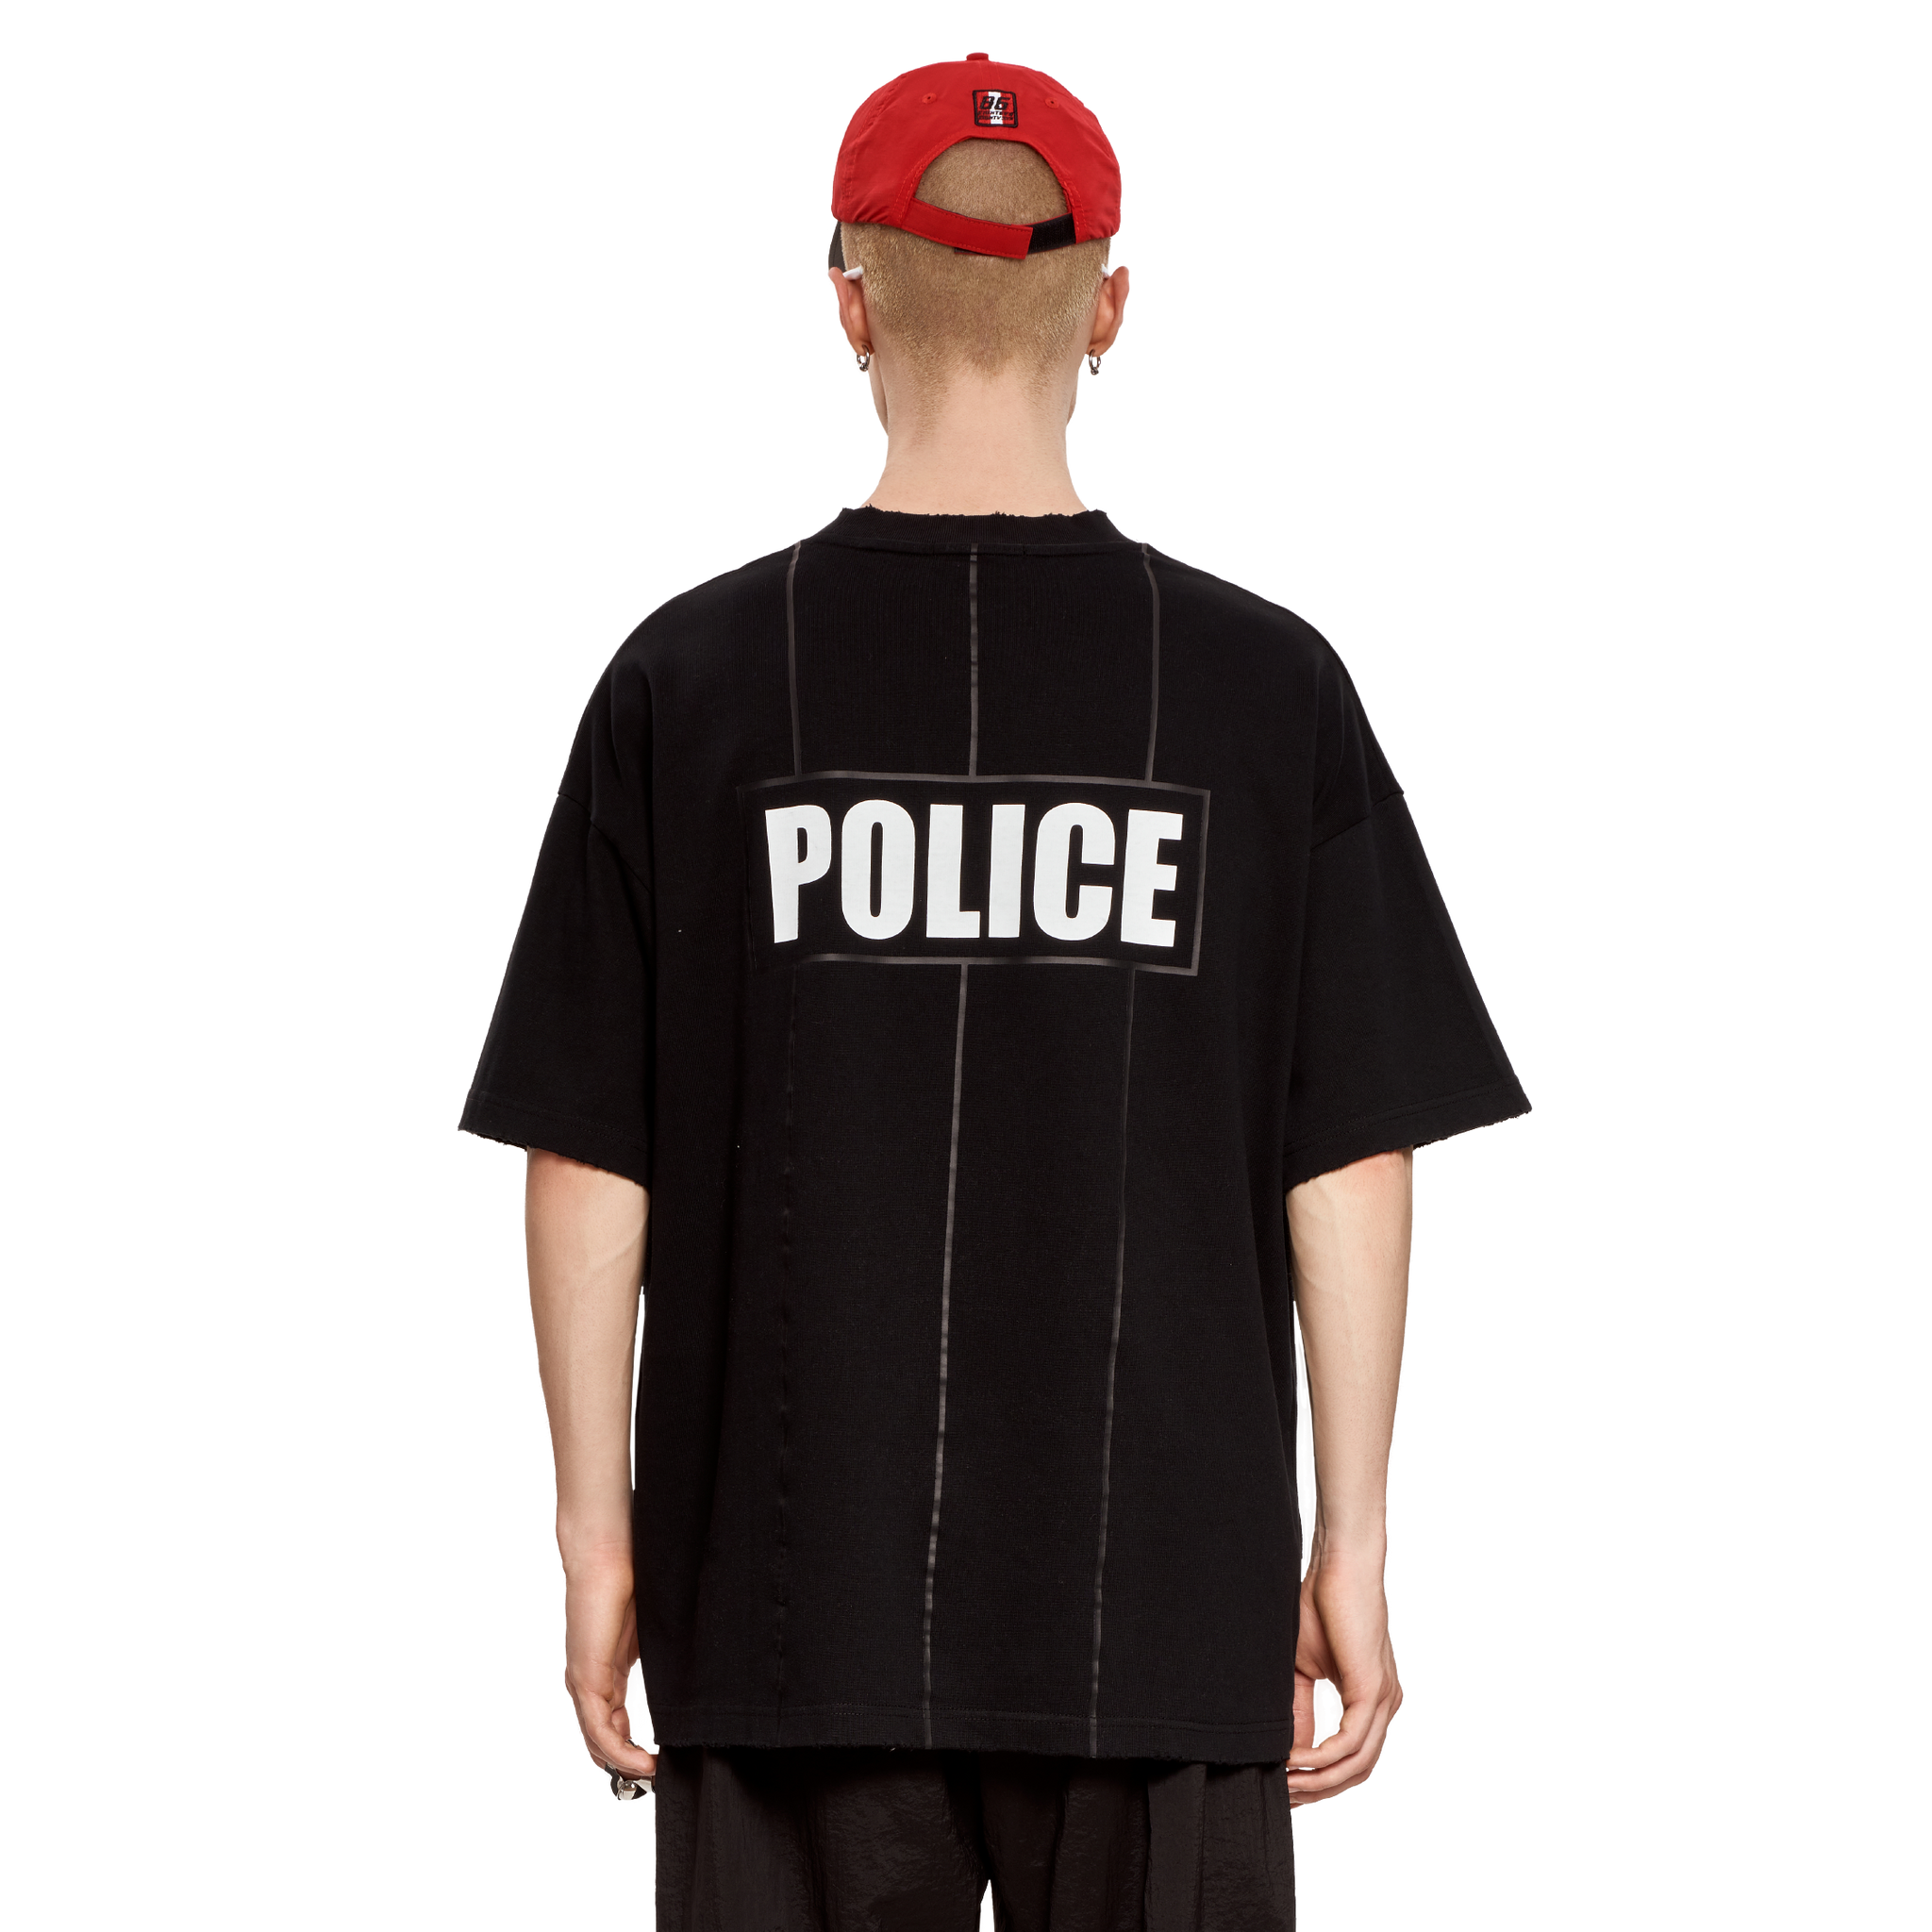 POLICE OFFICER T-SHIRT- BLACK